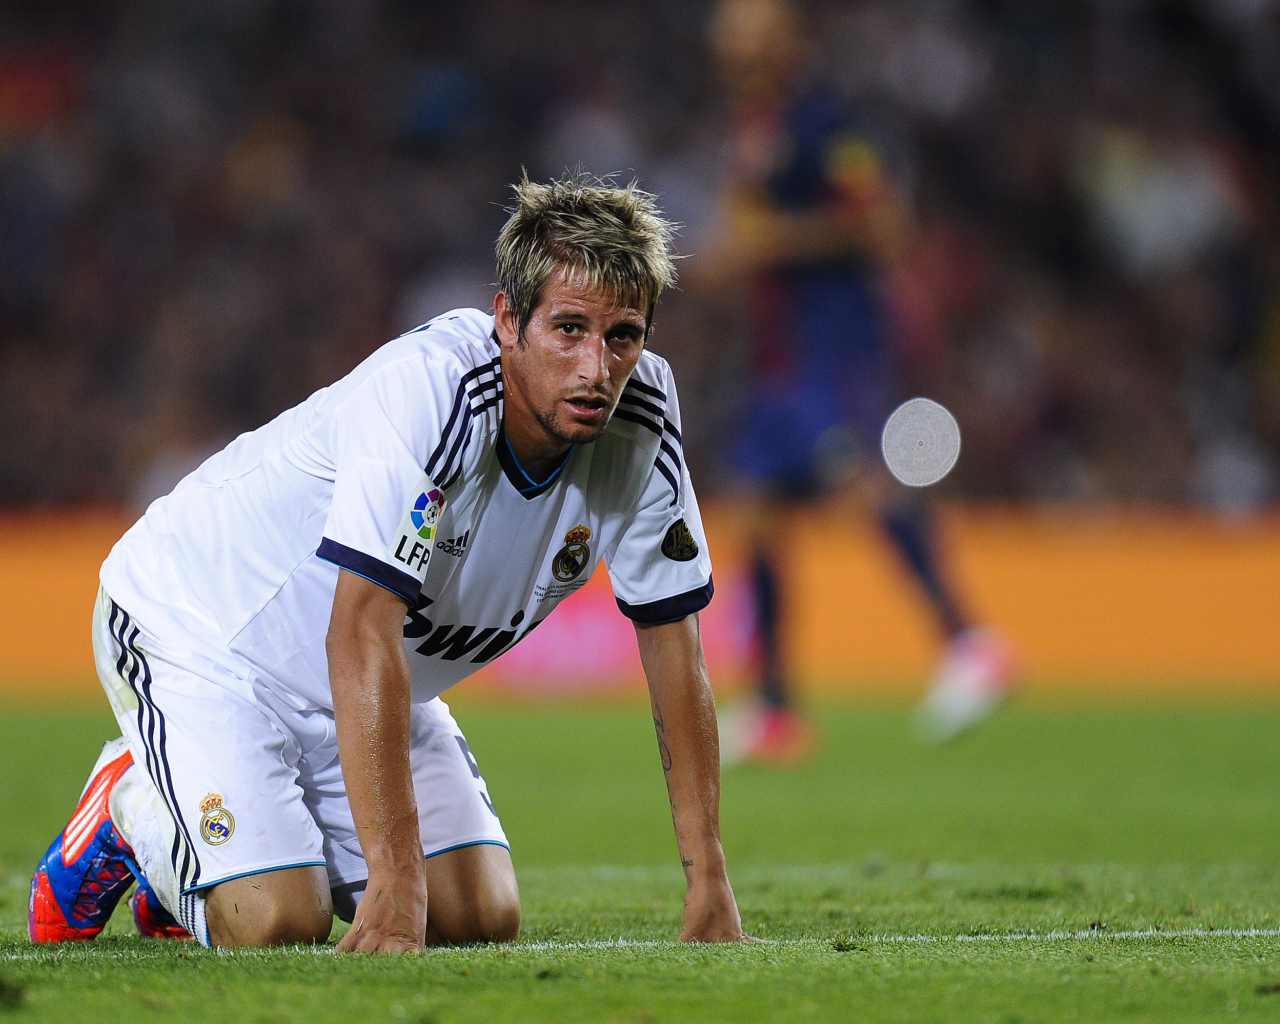 The best defender of Real Madrid Fábio Coentrão on his knees